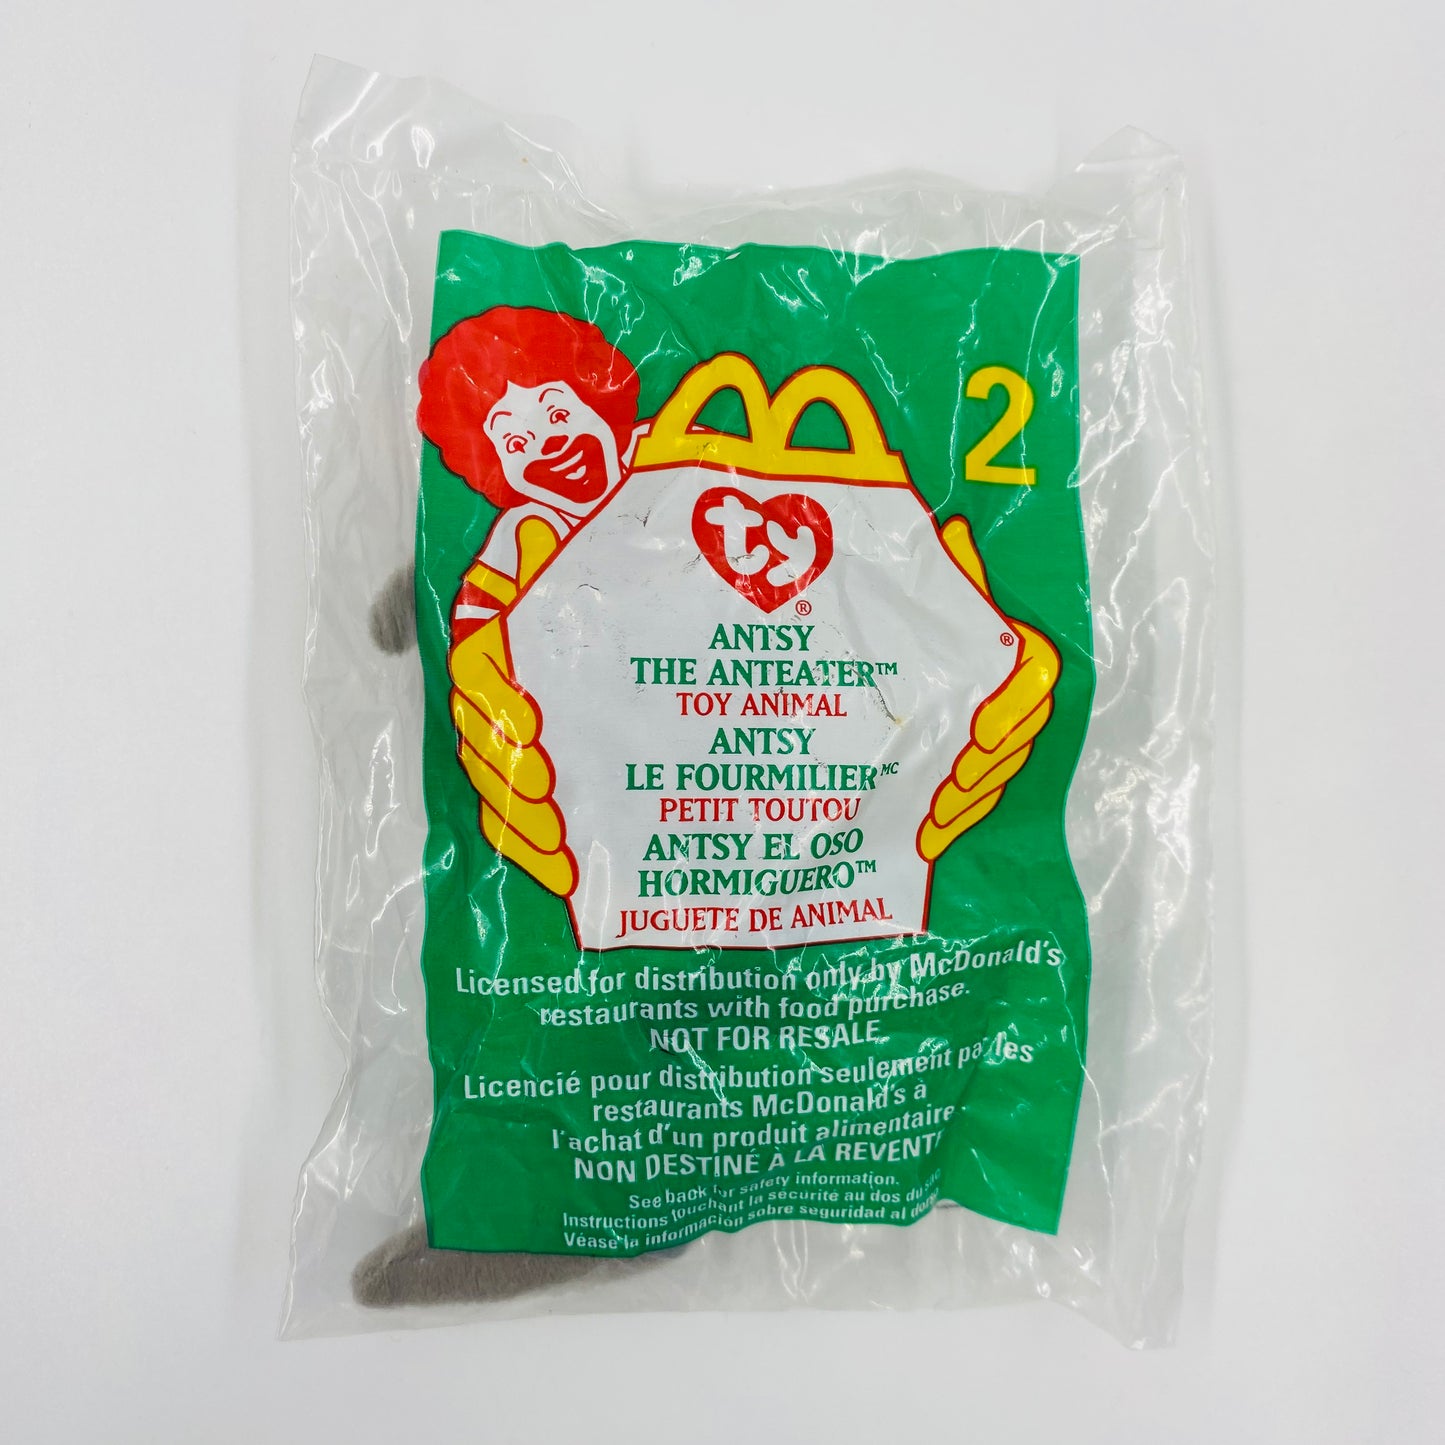 Teenie Beanie Babies Antsy the Anteater McDonald's Happy Meal bean bag plush toy animal (1999) bagged